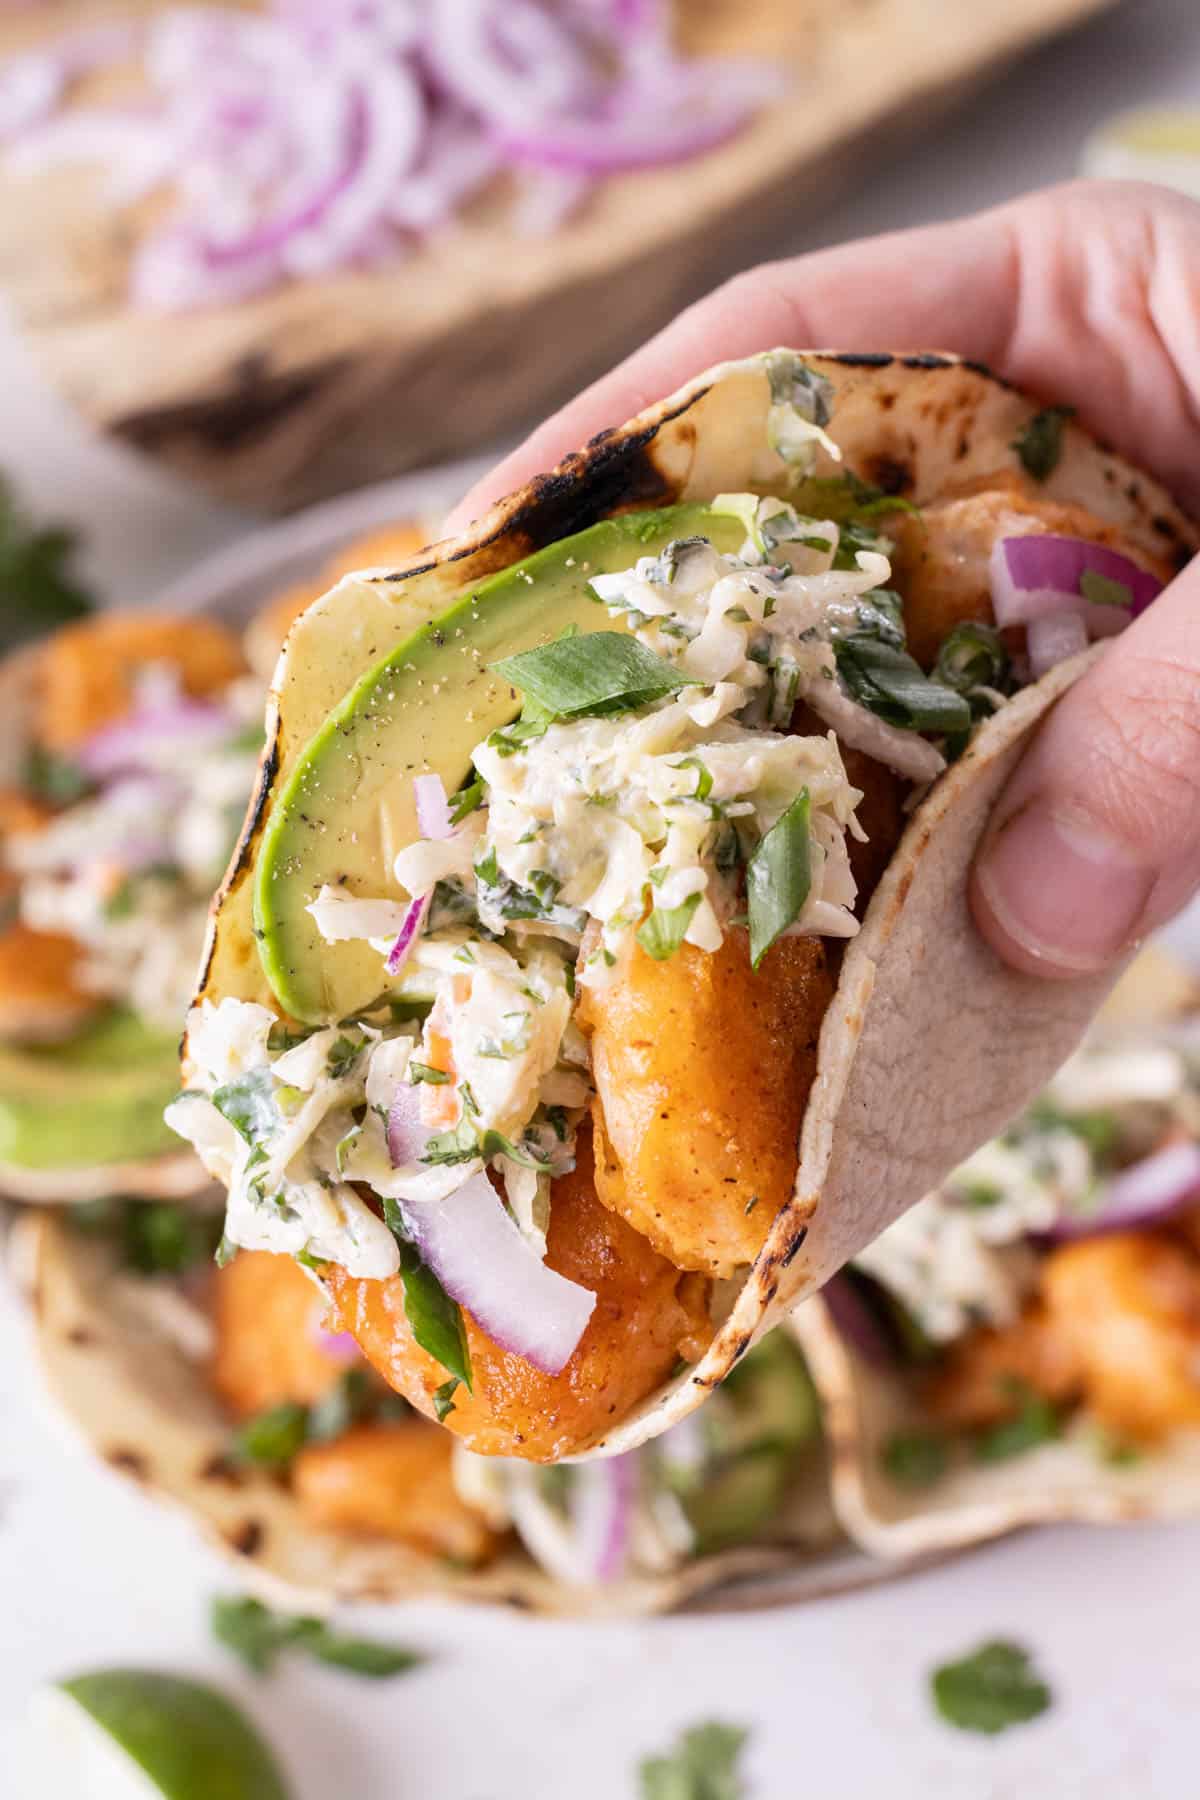 A hand lifts a single Baja shrimp taco from a plate.